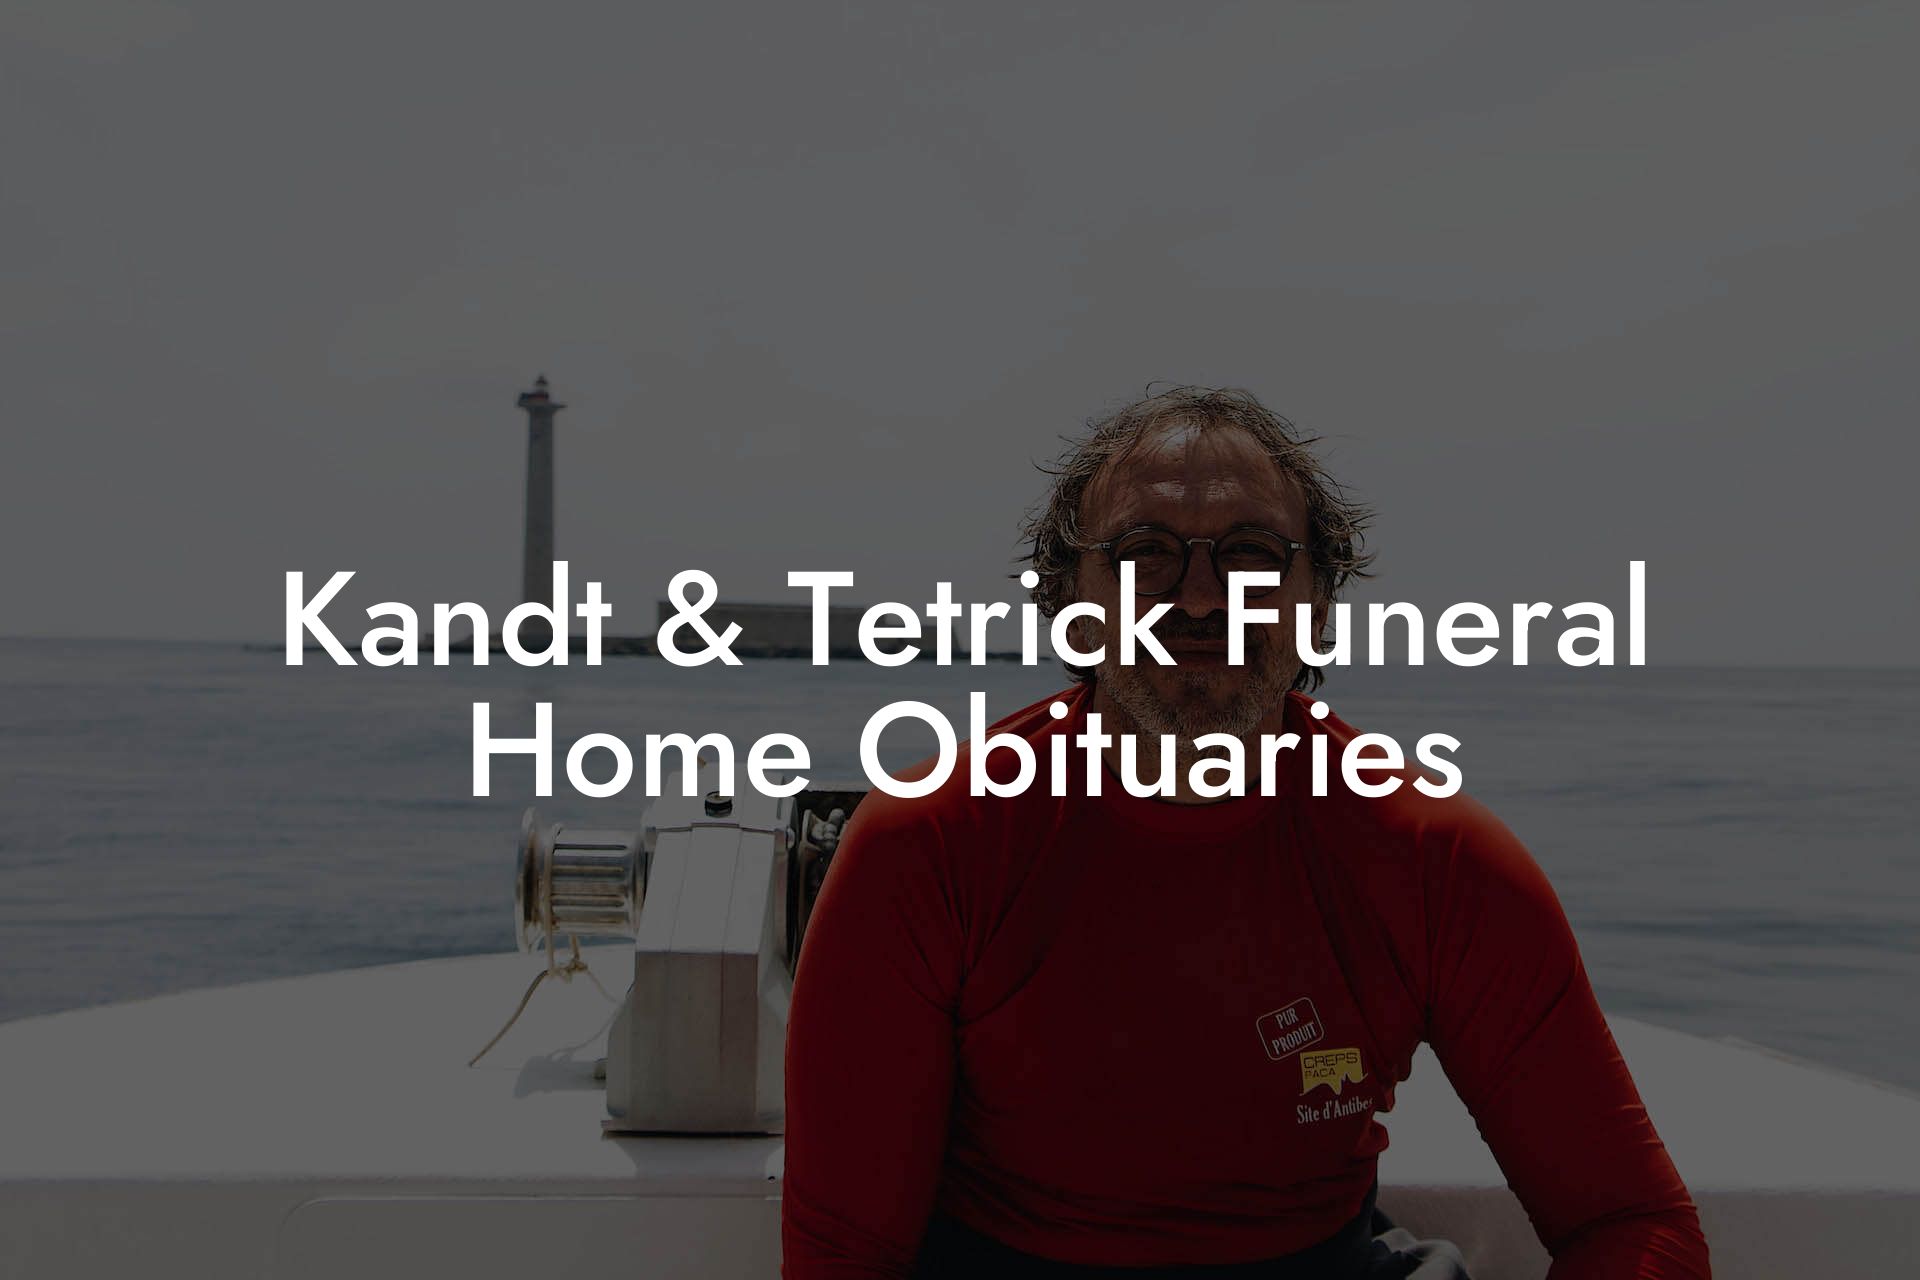 Kandt & Tetrick Funeral Home Obituaries